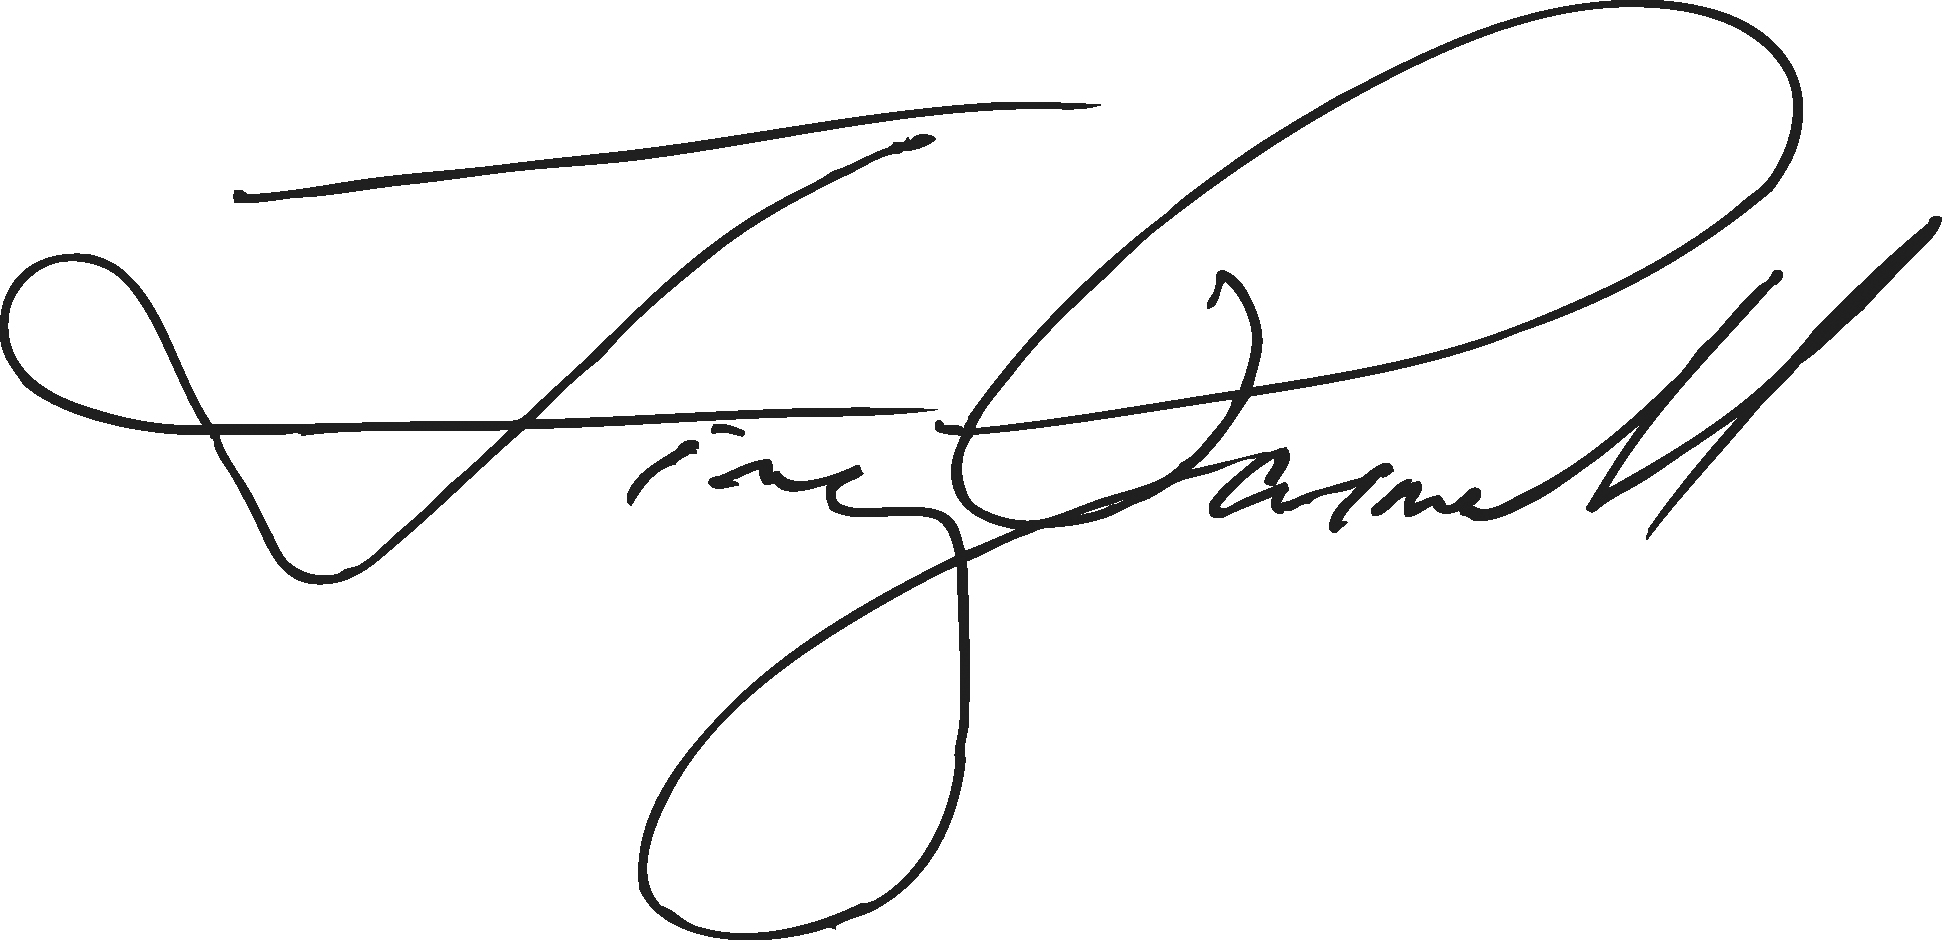 Mr. Parnell's signature. 